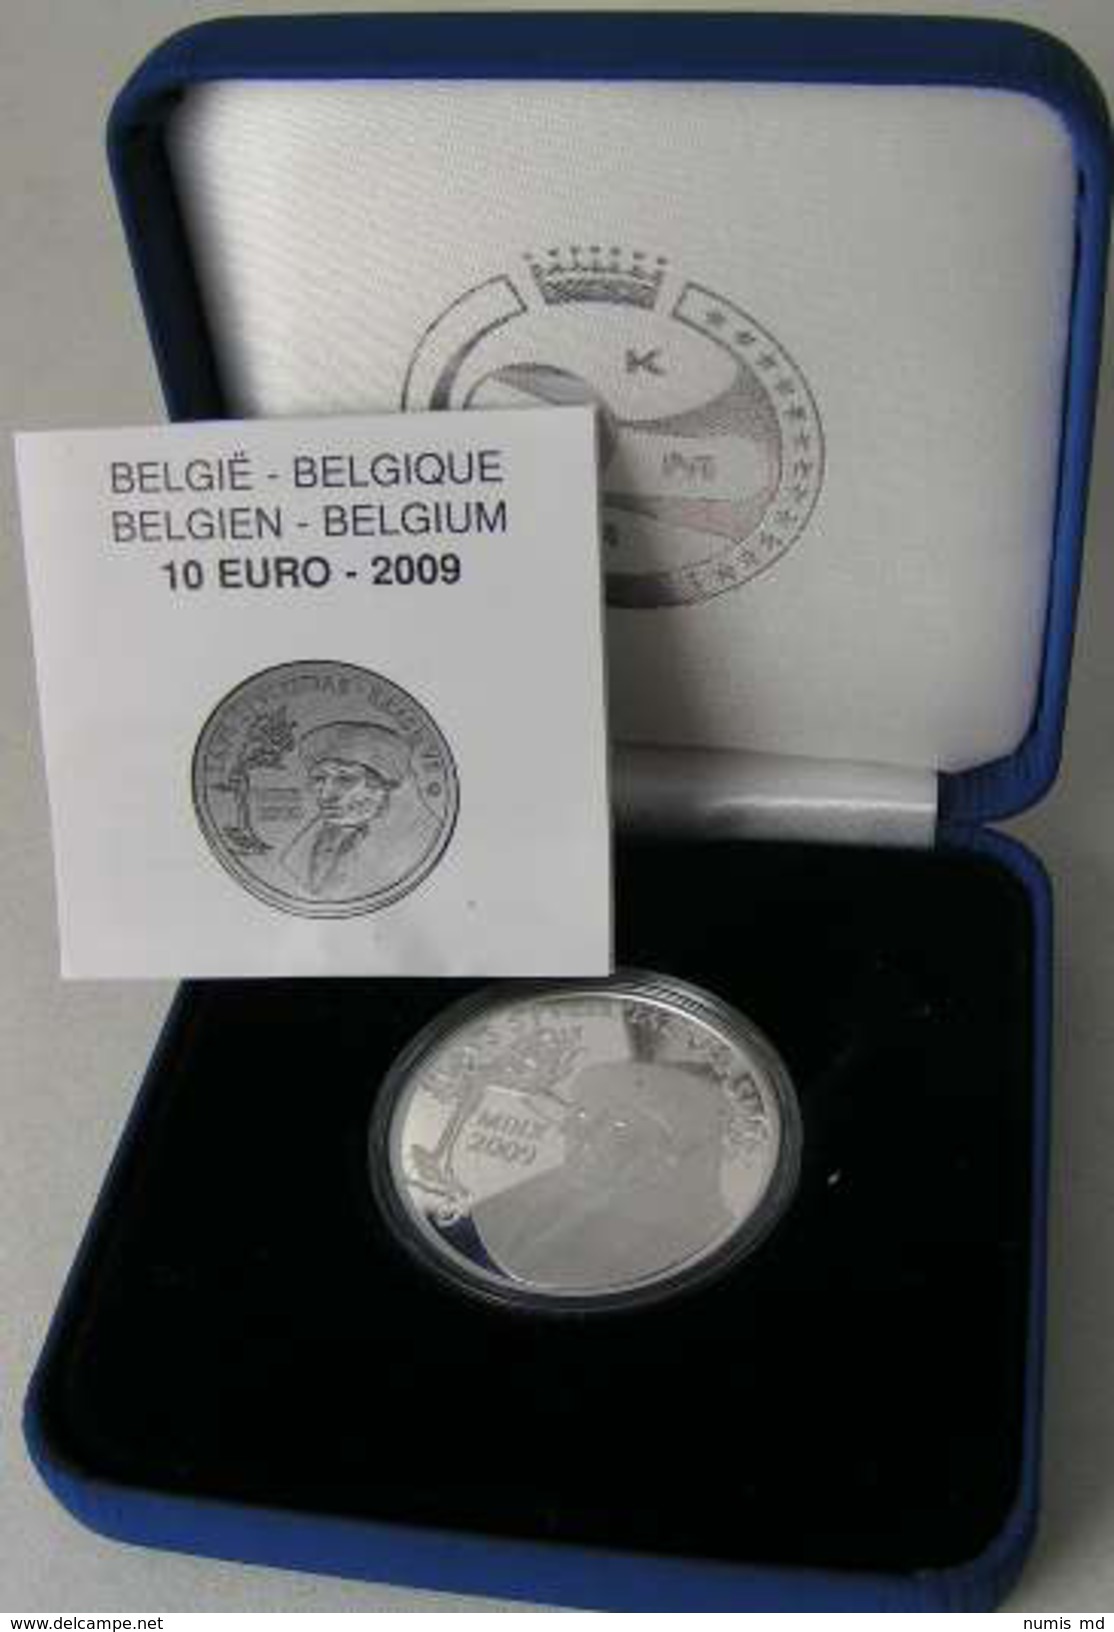 BE44 BELGIQUE 10 EURO 2009 "Erasmus"  *QP* Quality Proof  - ARGENT - SILBER - SILVER - Belgium